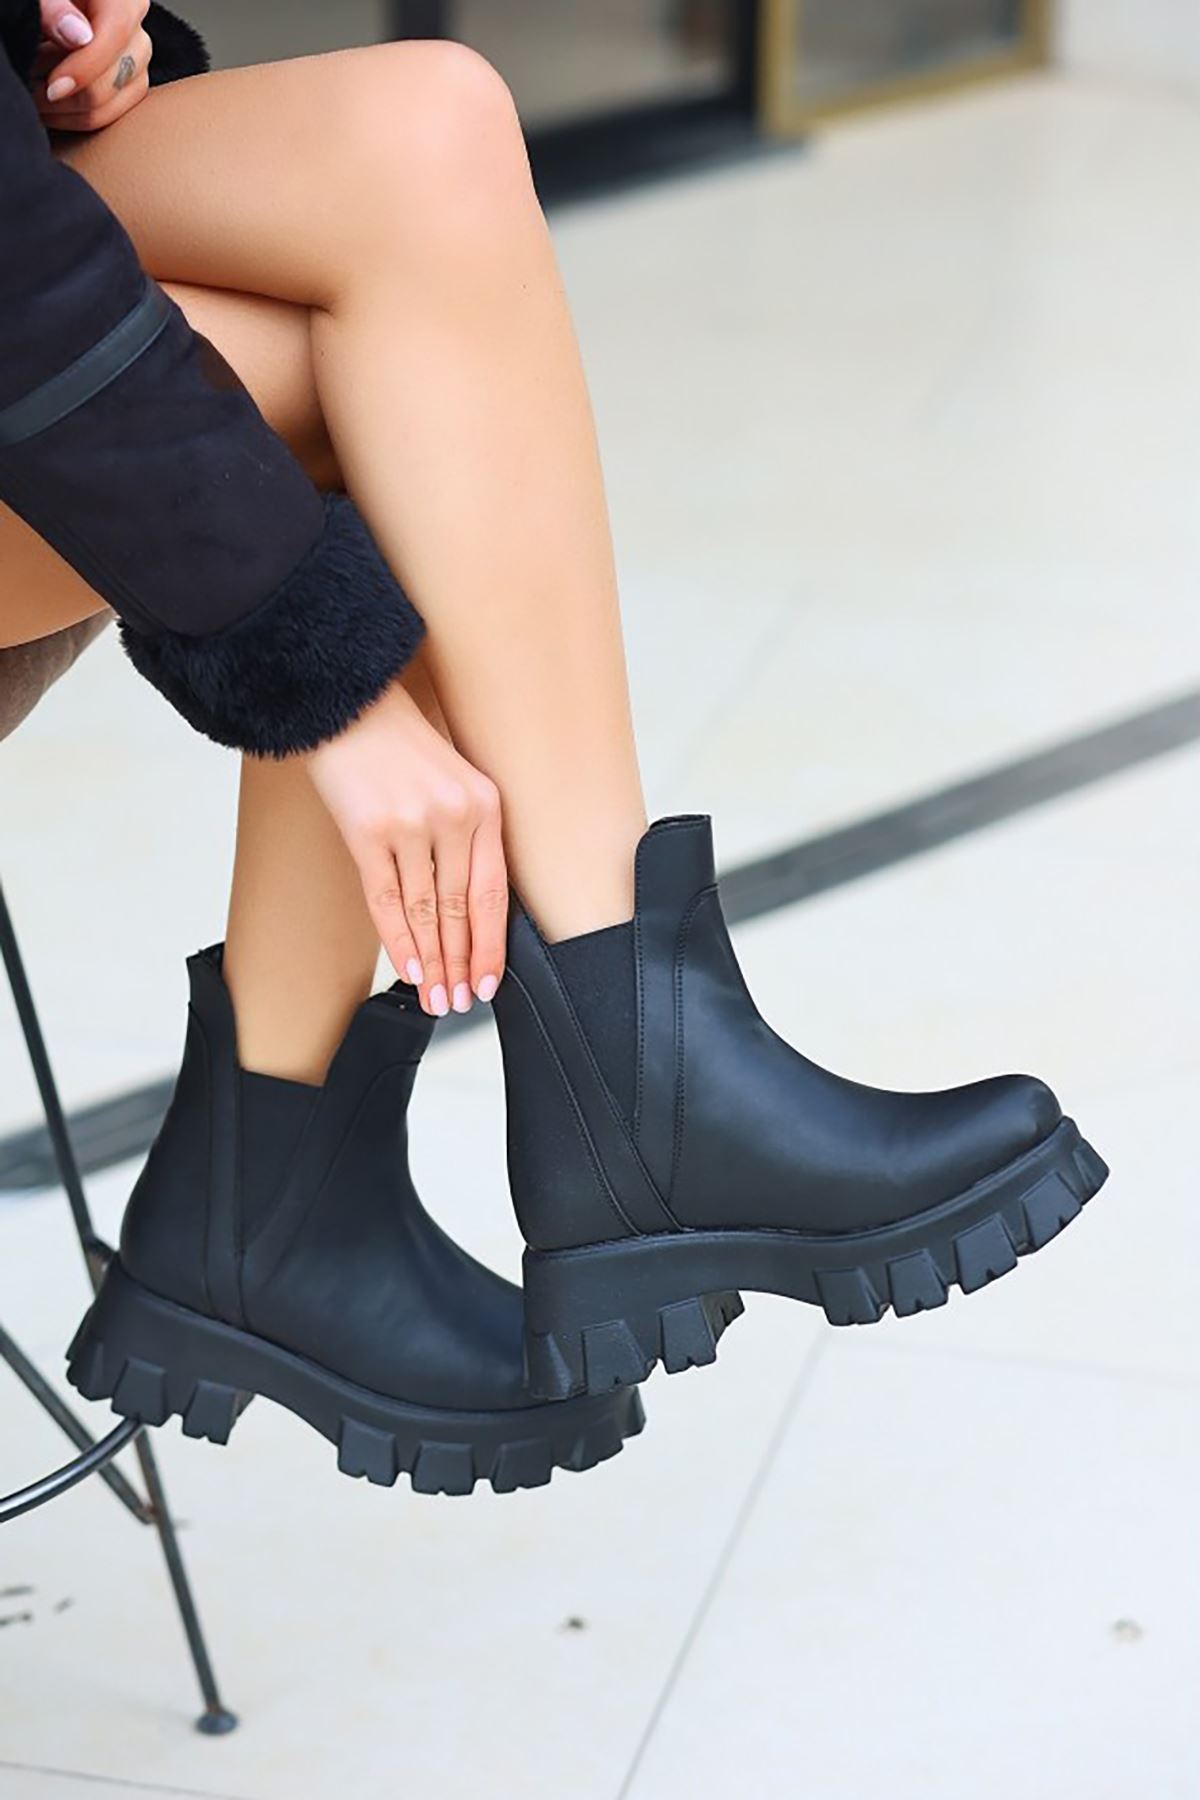 Mida Shoes Jati Siyah Deri Dolgu Topuk Kadın Bot